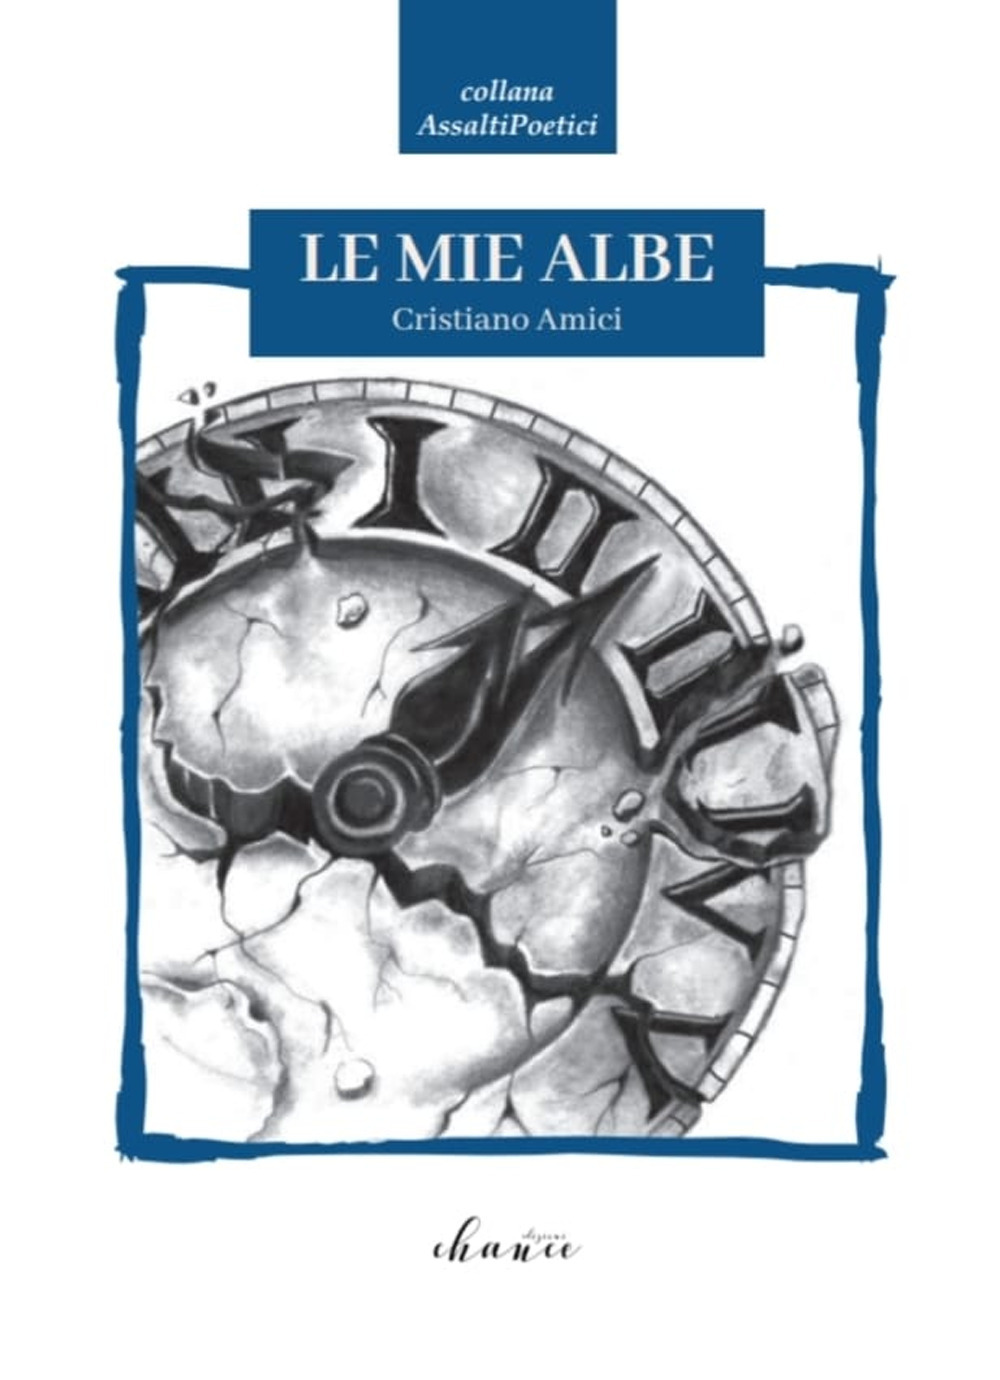 Image of Le mie albe